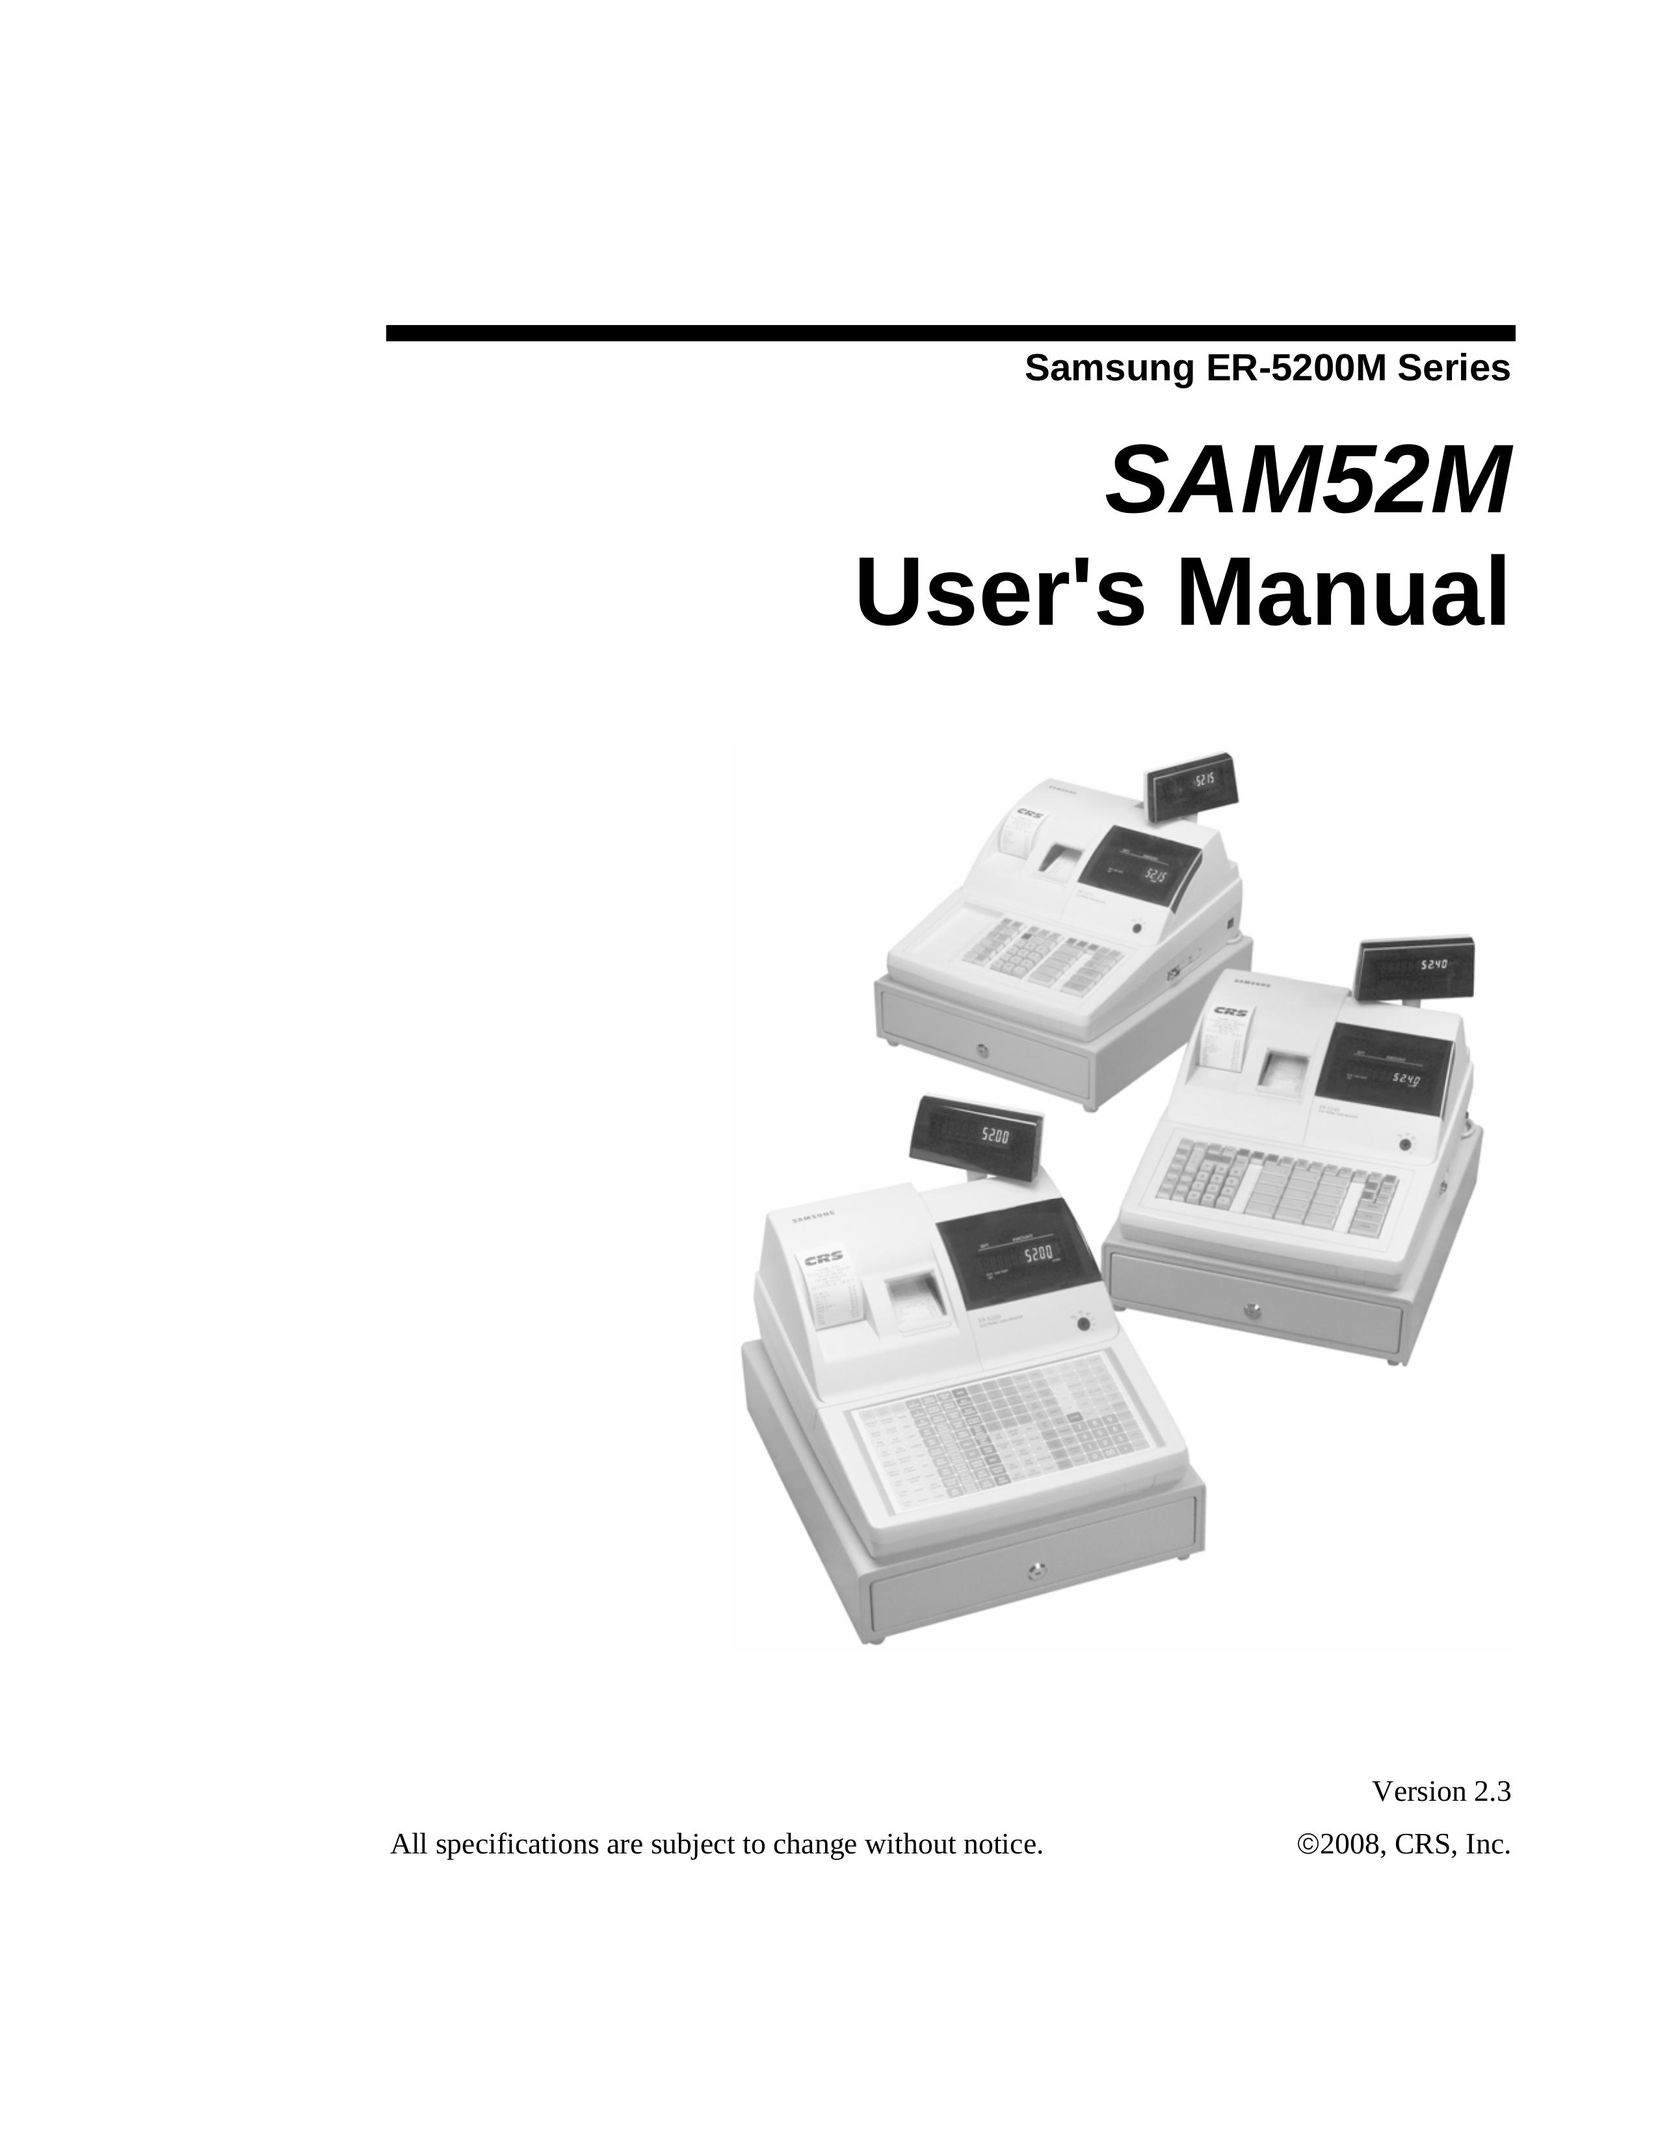 Samsung SAM52M Cash Register User Manual